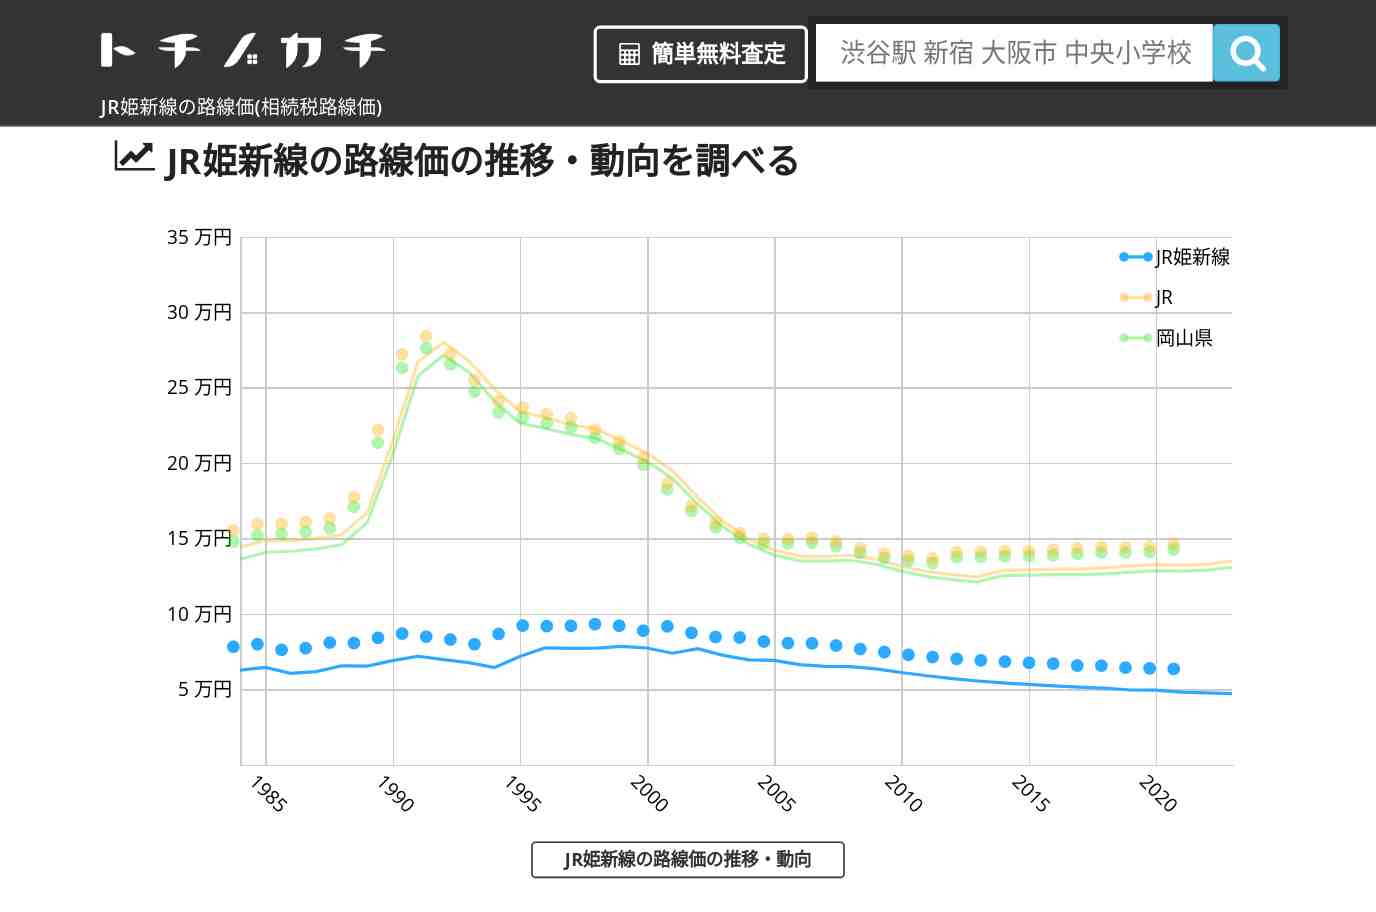 JR姫新線(JR)の路線価(相続税路線価) | トチノカチ